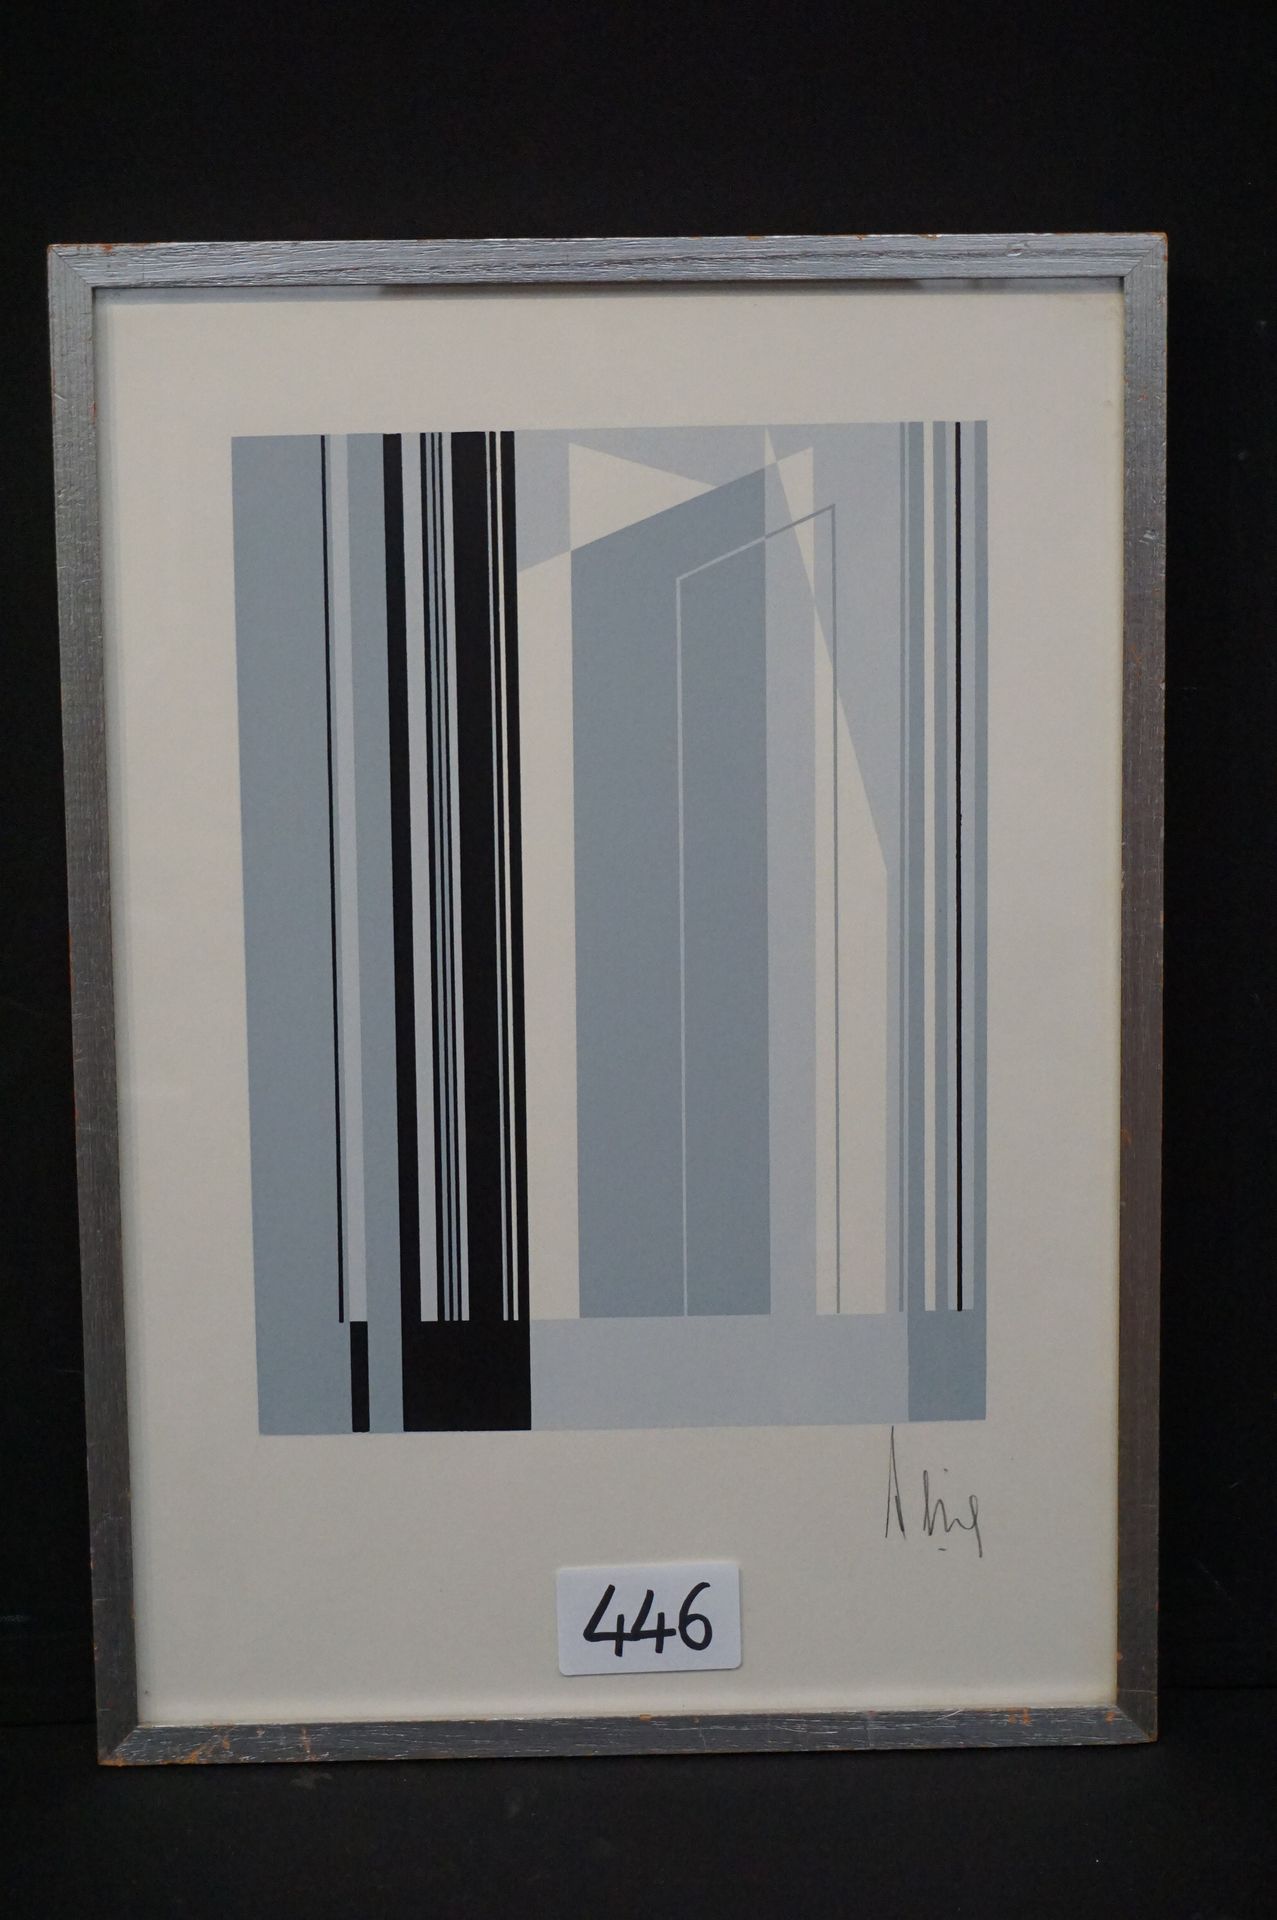 LUC PEIRE (1916 - 1994) "几何构成" - 石版画 - 34 x 25 cm